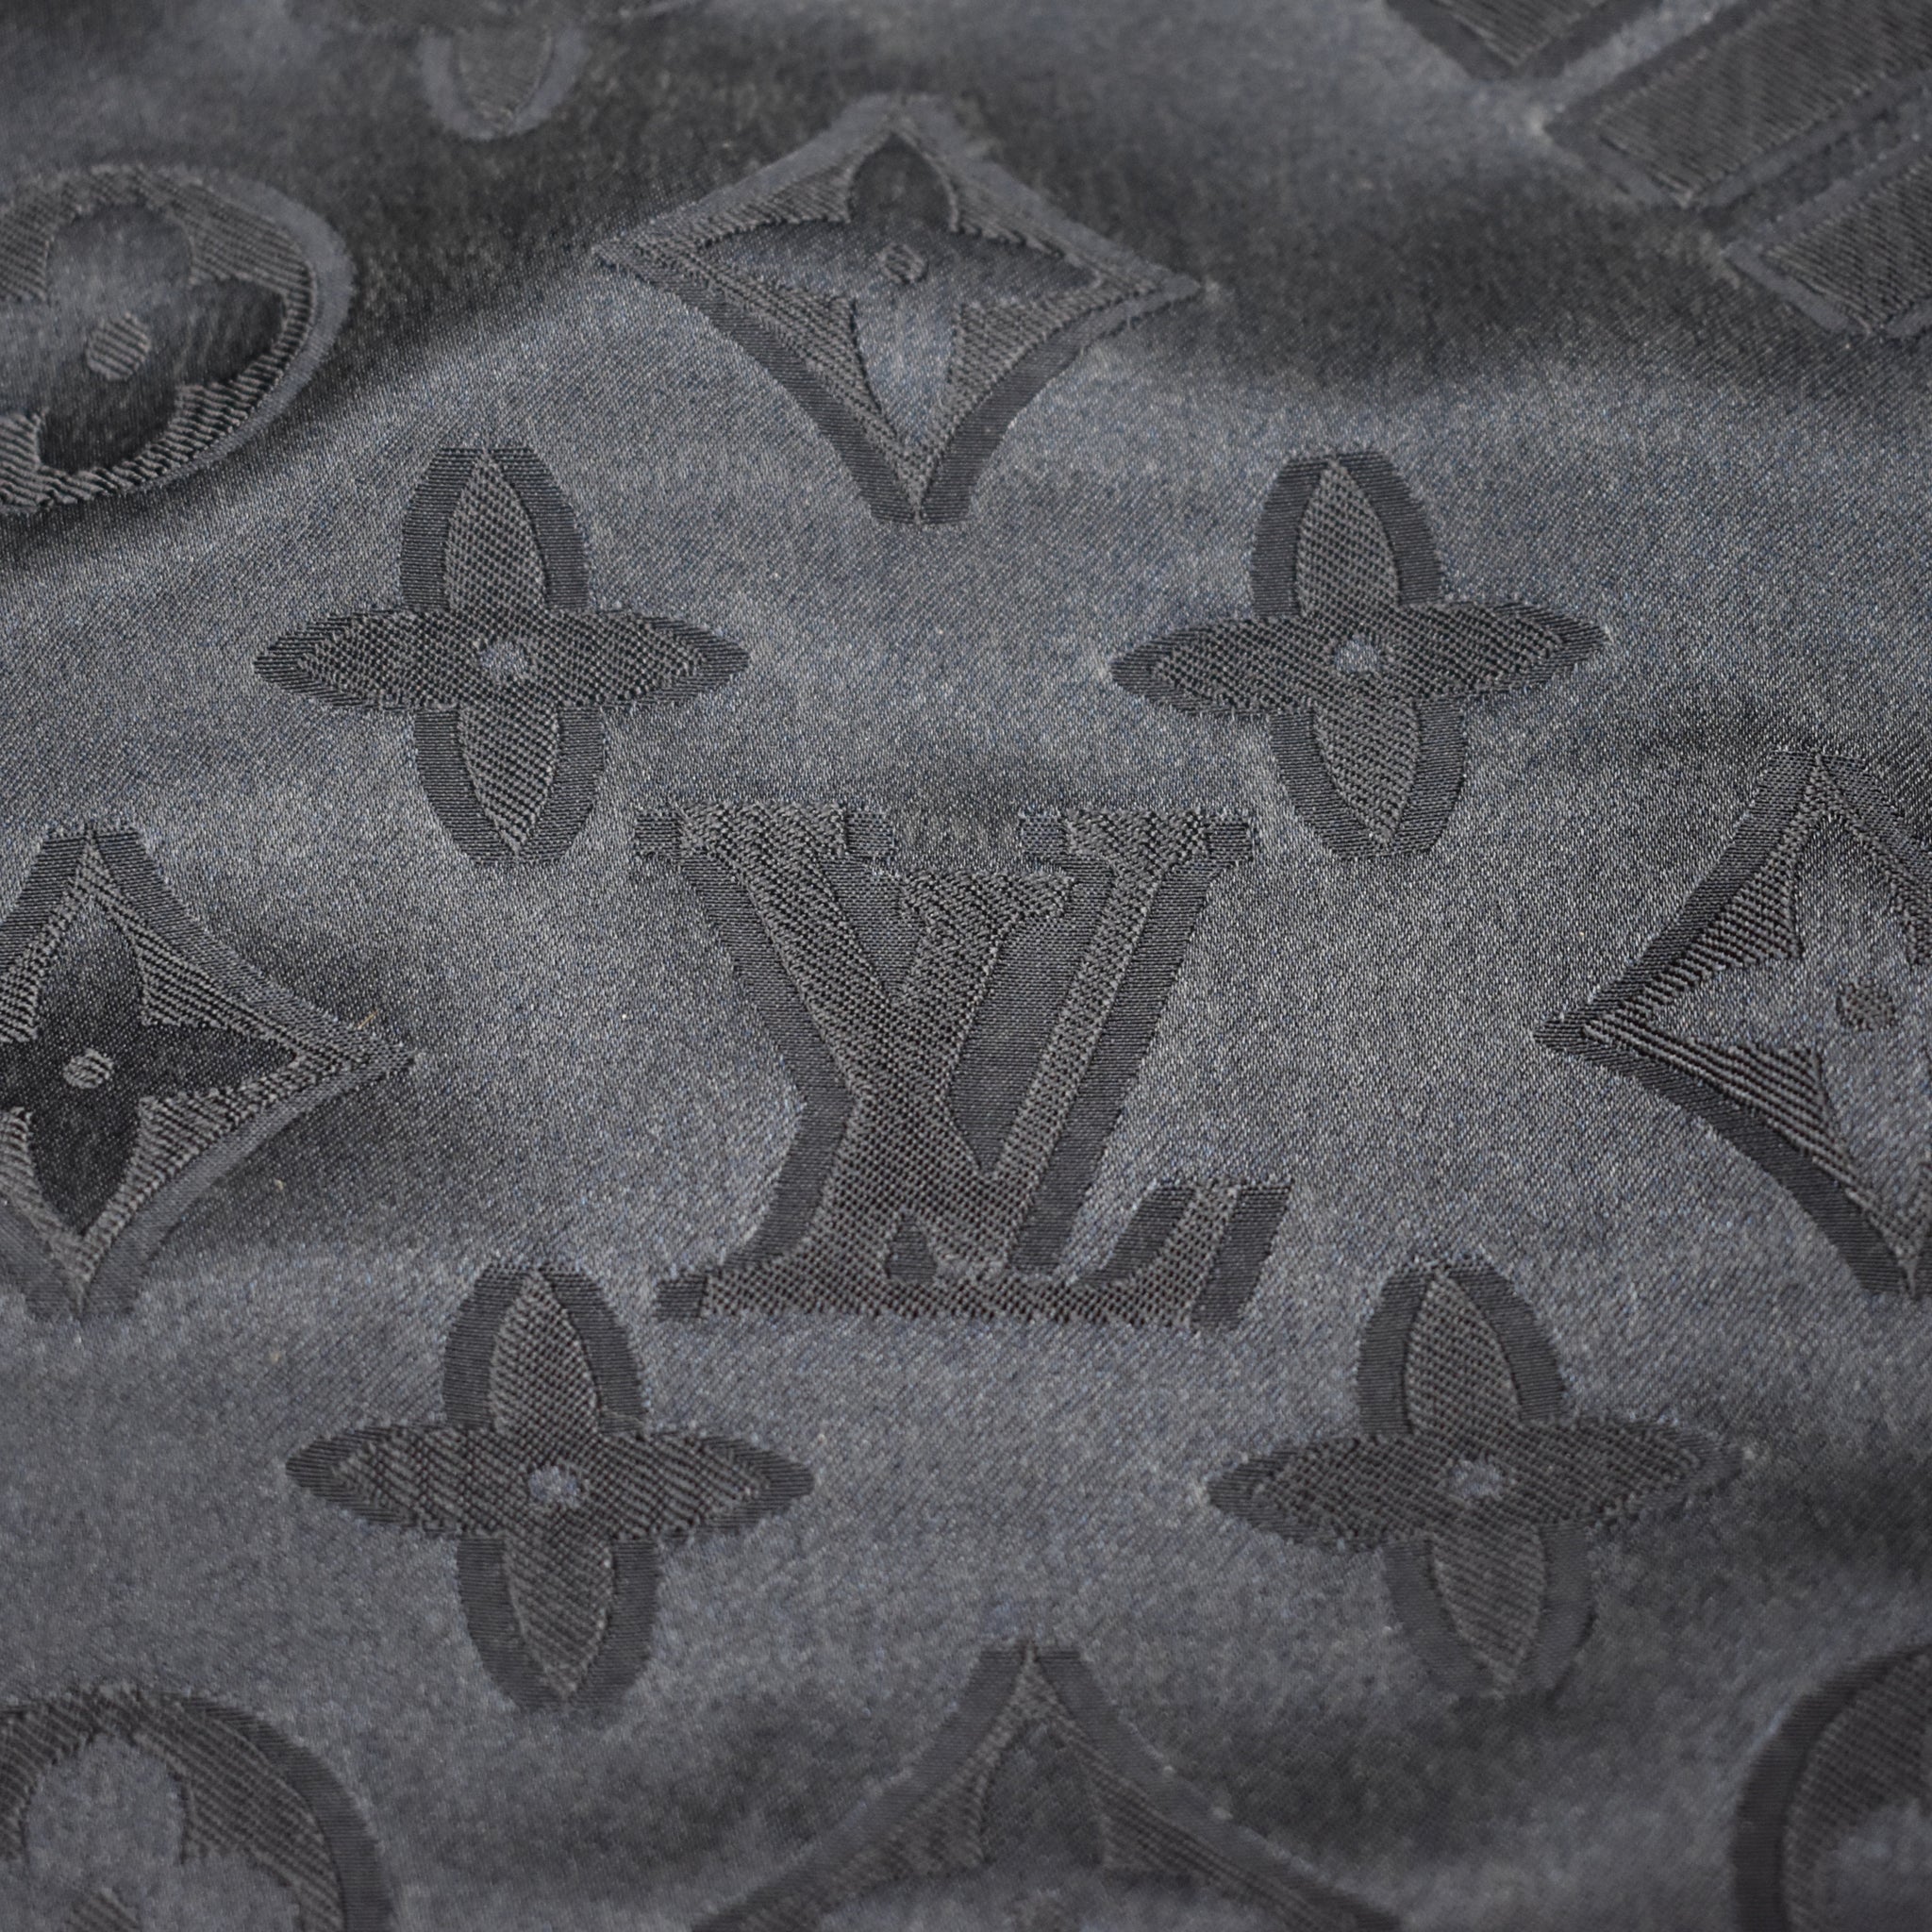 Louis Vuitton Pajama Set w/ Tags - Black Lounge & Sleepwear